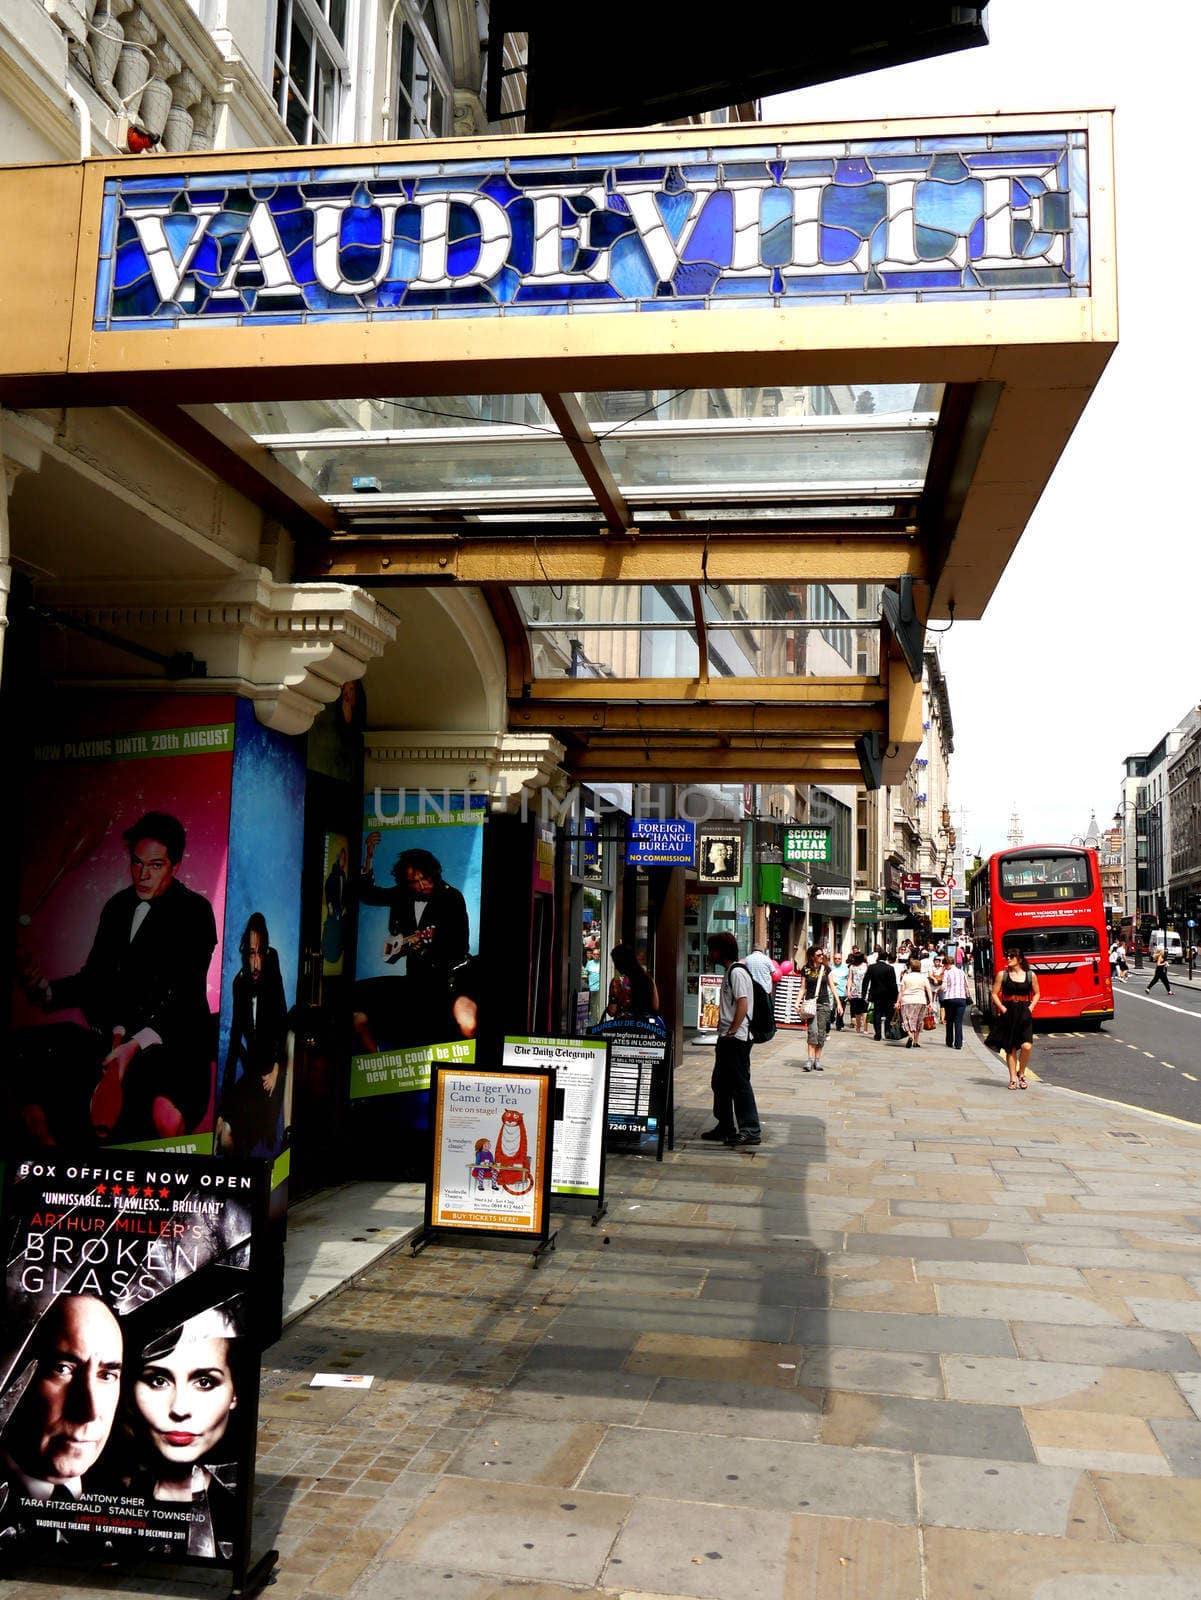 Vauderville Theatre Stand London